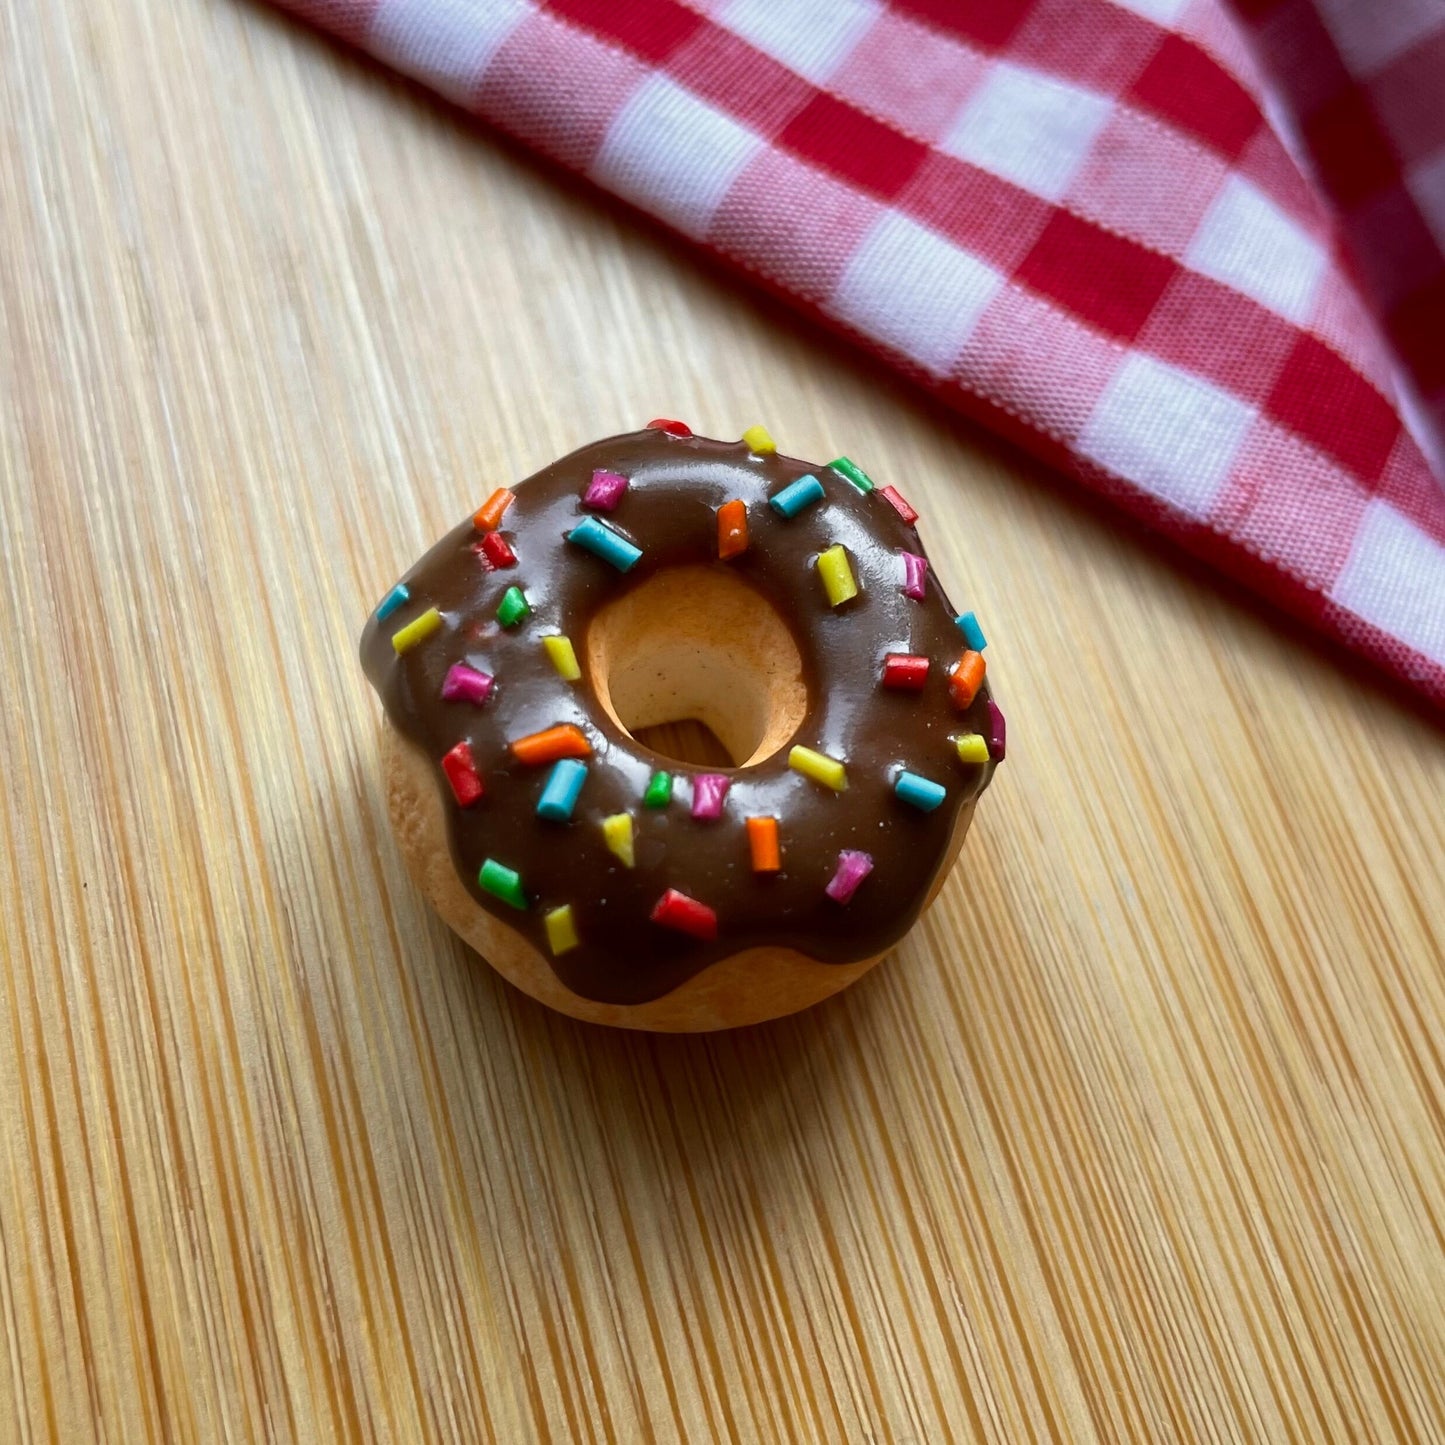 Food magnet - Chocolate Donut magnet, fridge magnets, memo board magnets, notice board magnets, miniature food, realistic food magnet